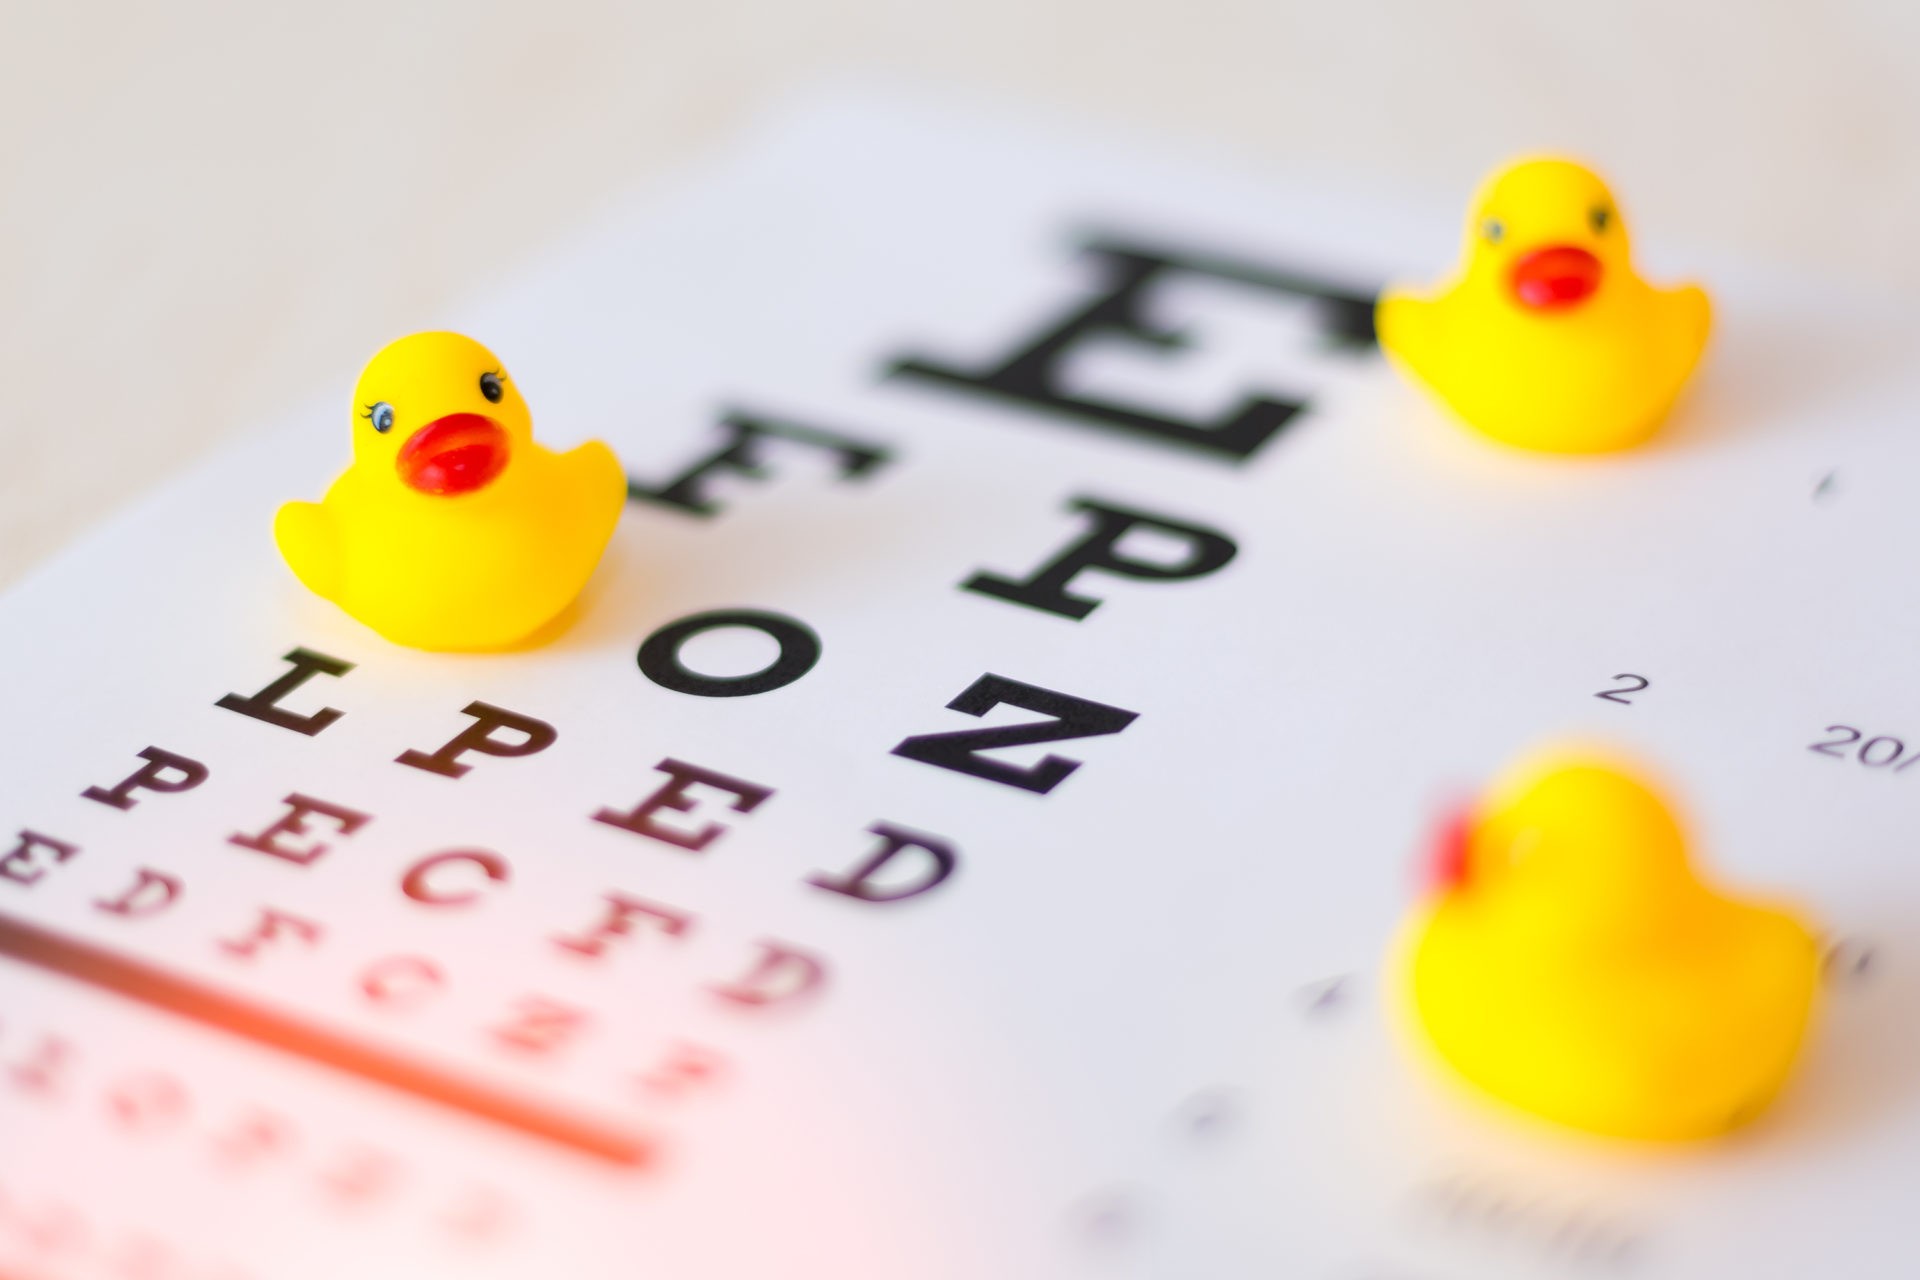 Pediatric eye exam sheet with yellow rubber duck